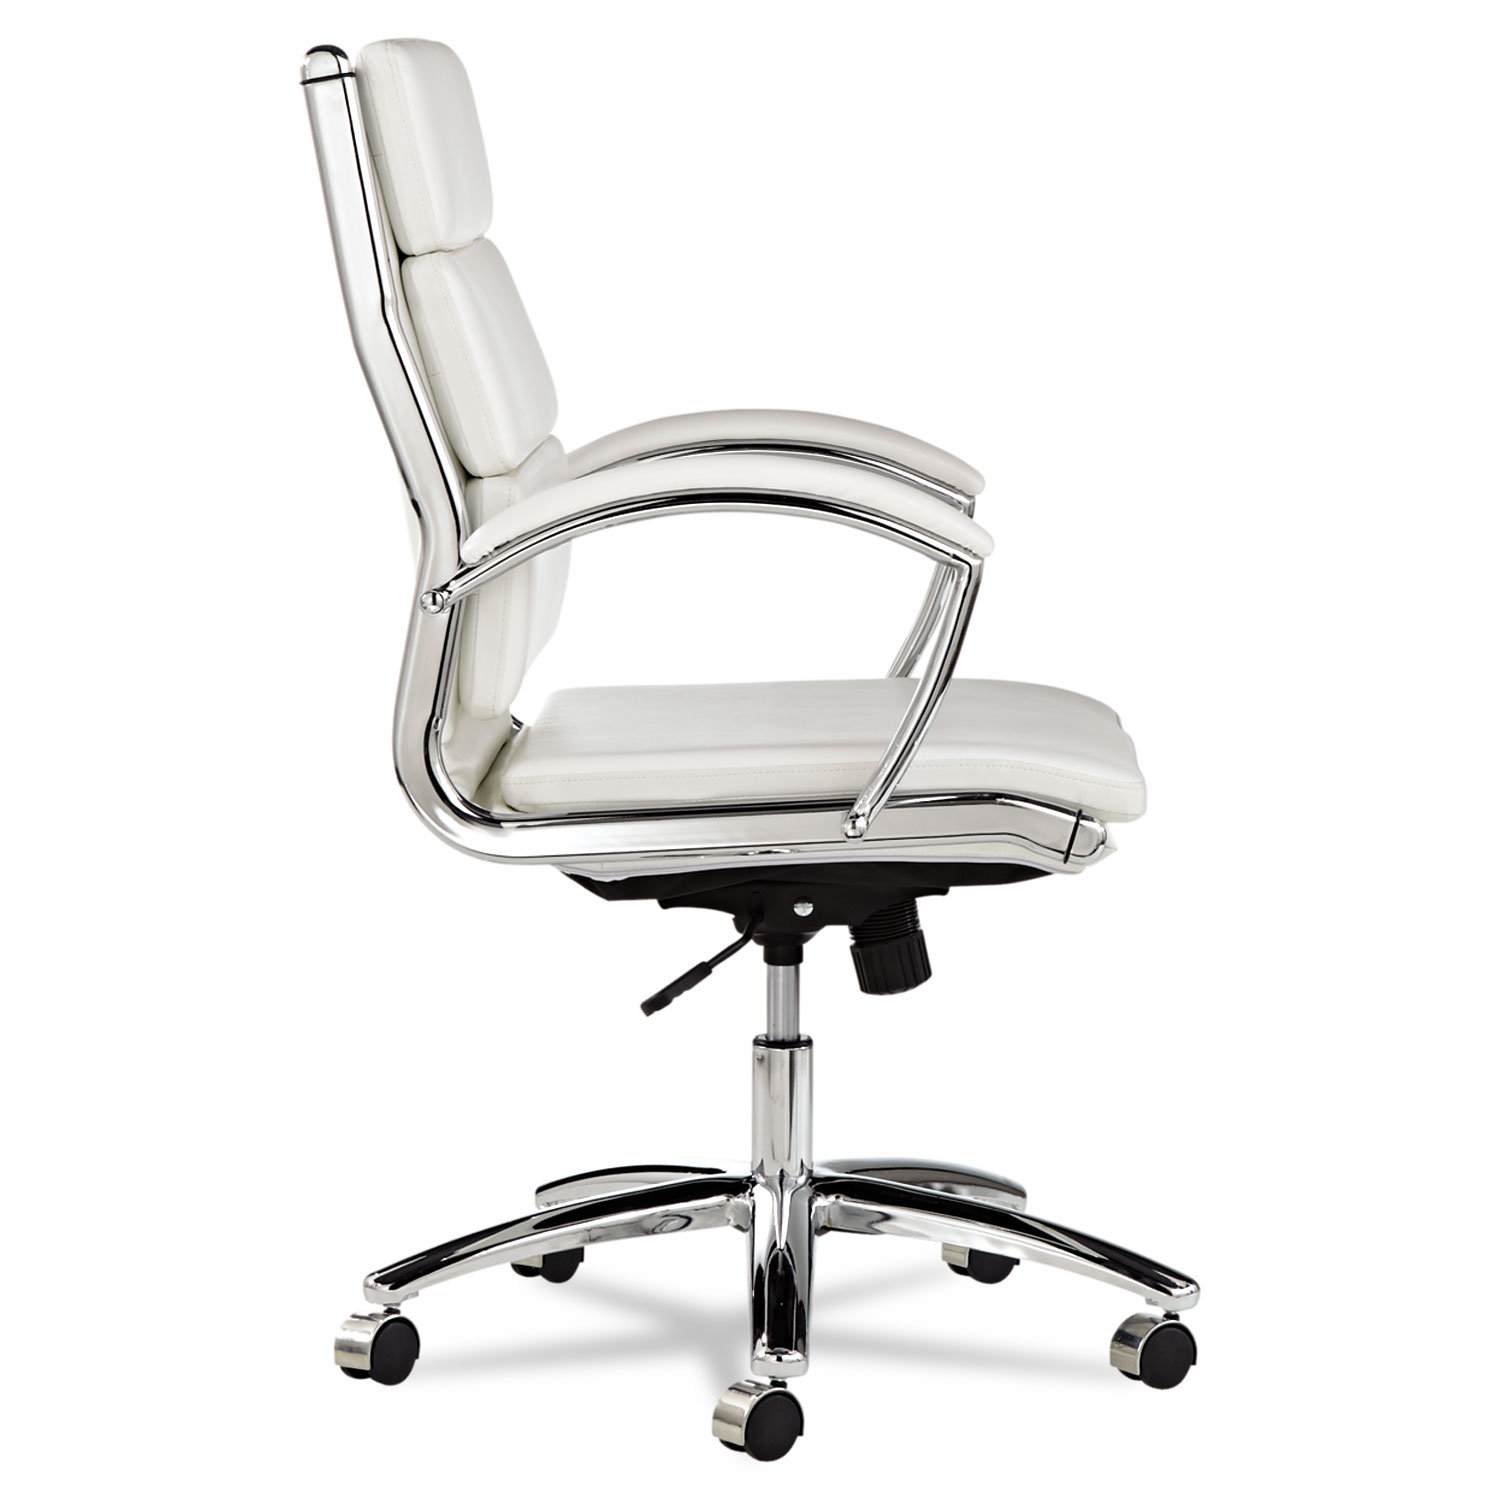 Alera Neratoli Mid-Back Slim Profile Chair, Supports up to 275 lbs., White Seat/White Back, Chrome Base